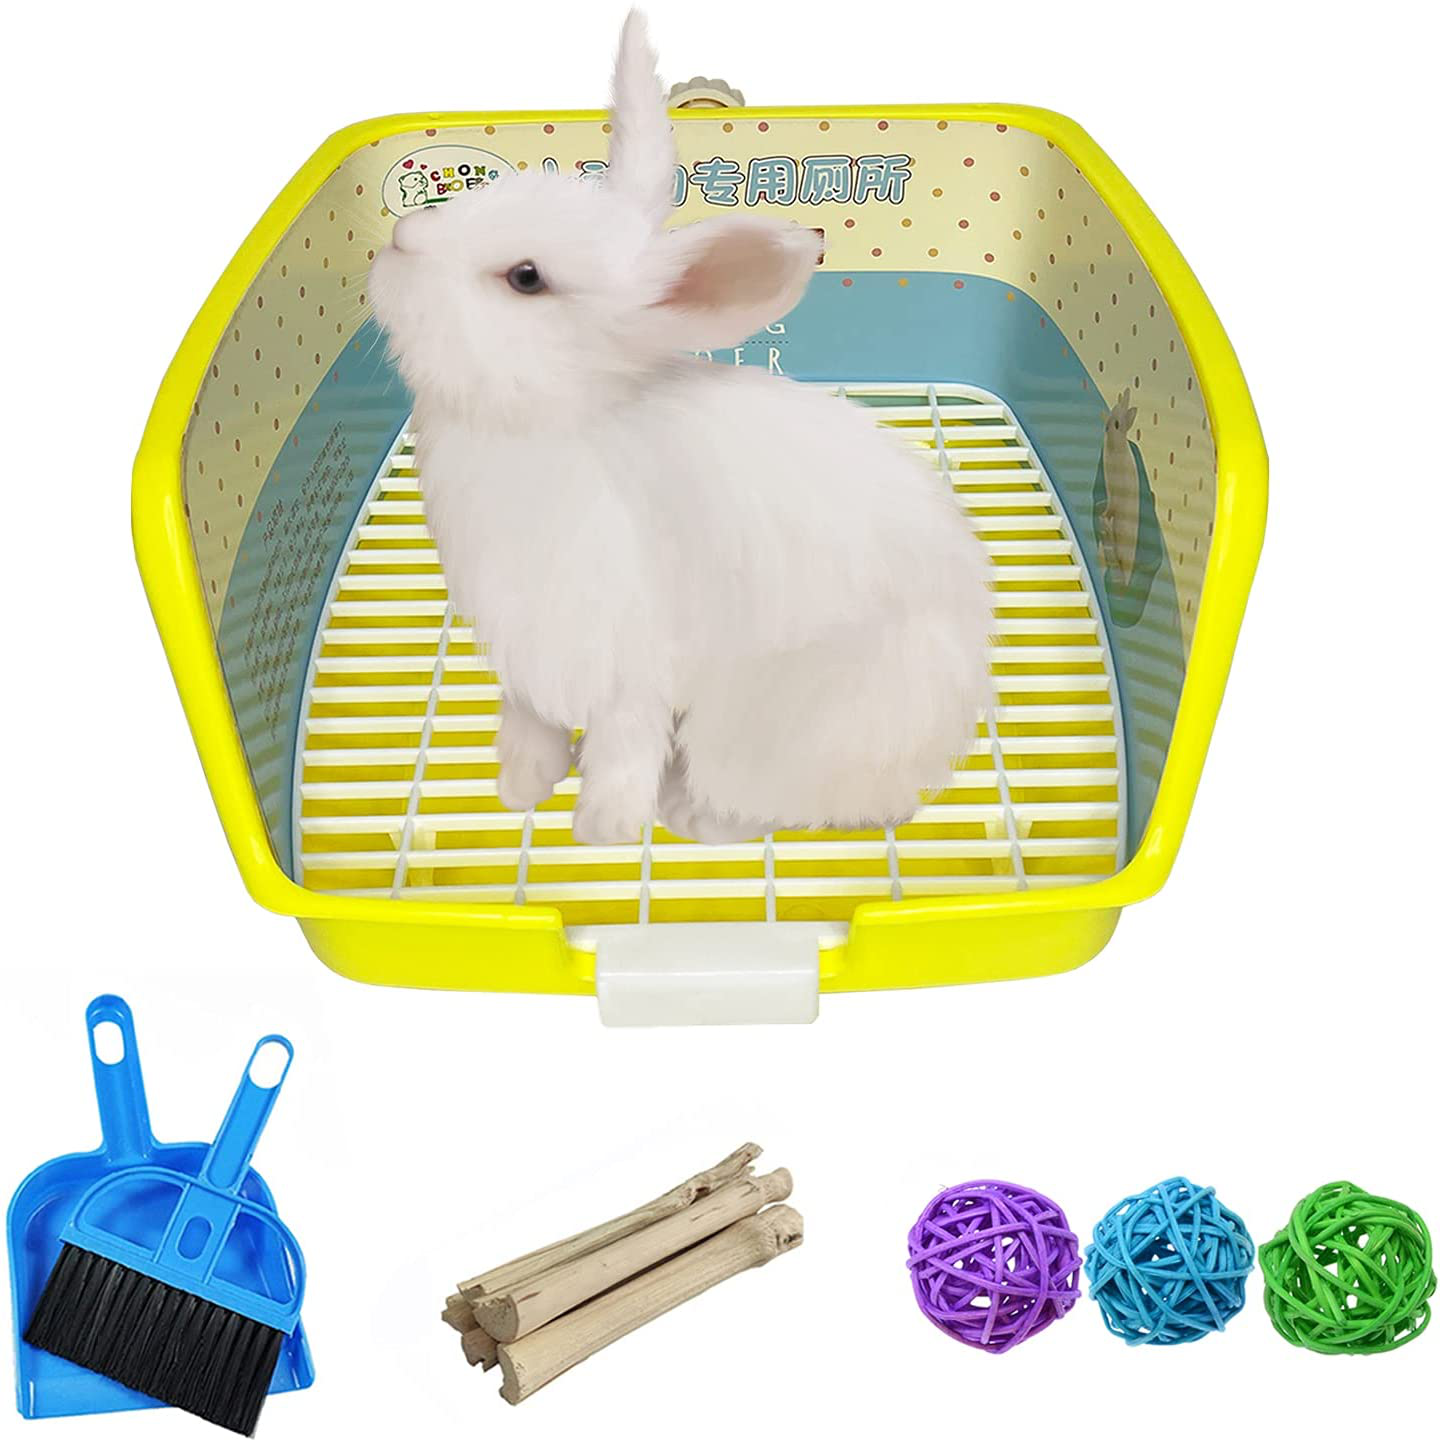 Kathson Bunny Litter Box Pets Toilet Small Animal Potty Trainer Corner Litter Bedding Box Plastic Square Cage Box Pet Pan for Guinea Pig/Hamter/Ferret/Galesaur